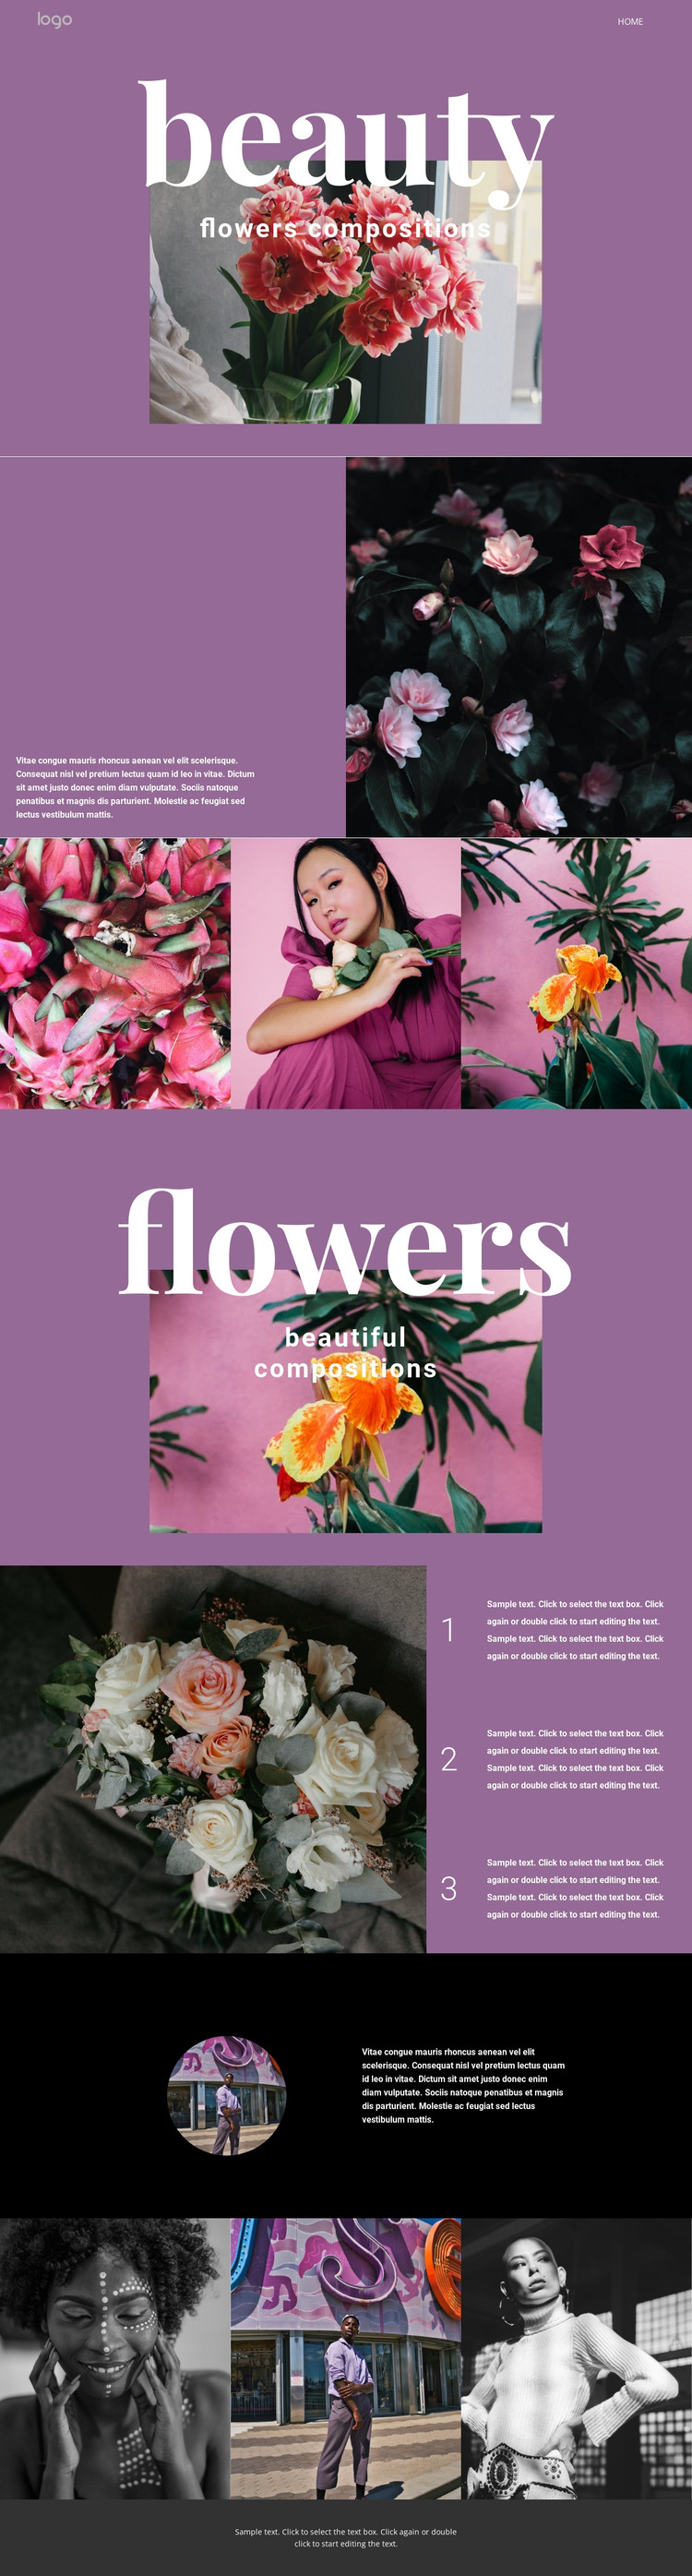 Flower salon Web Design